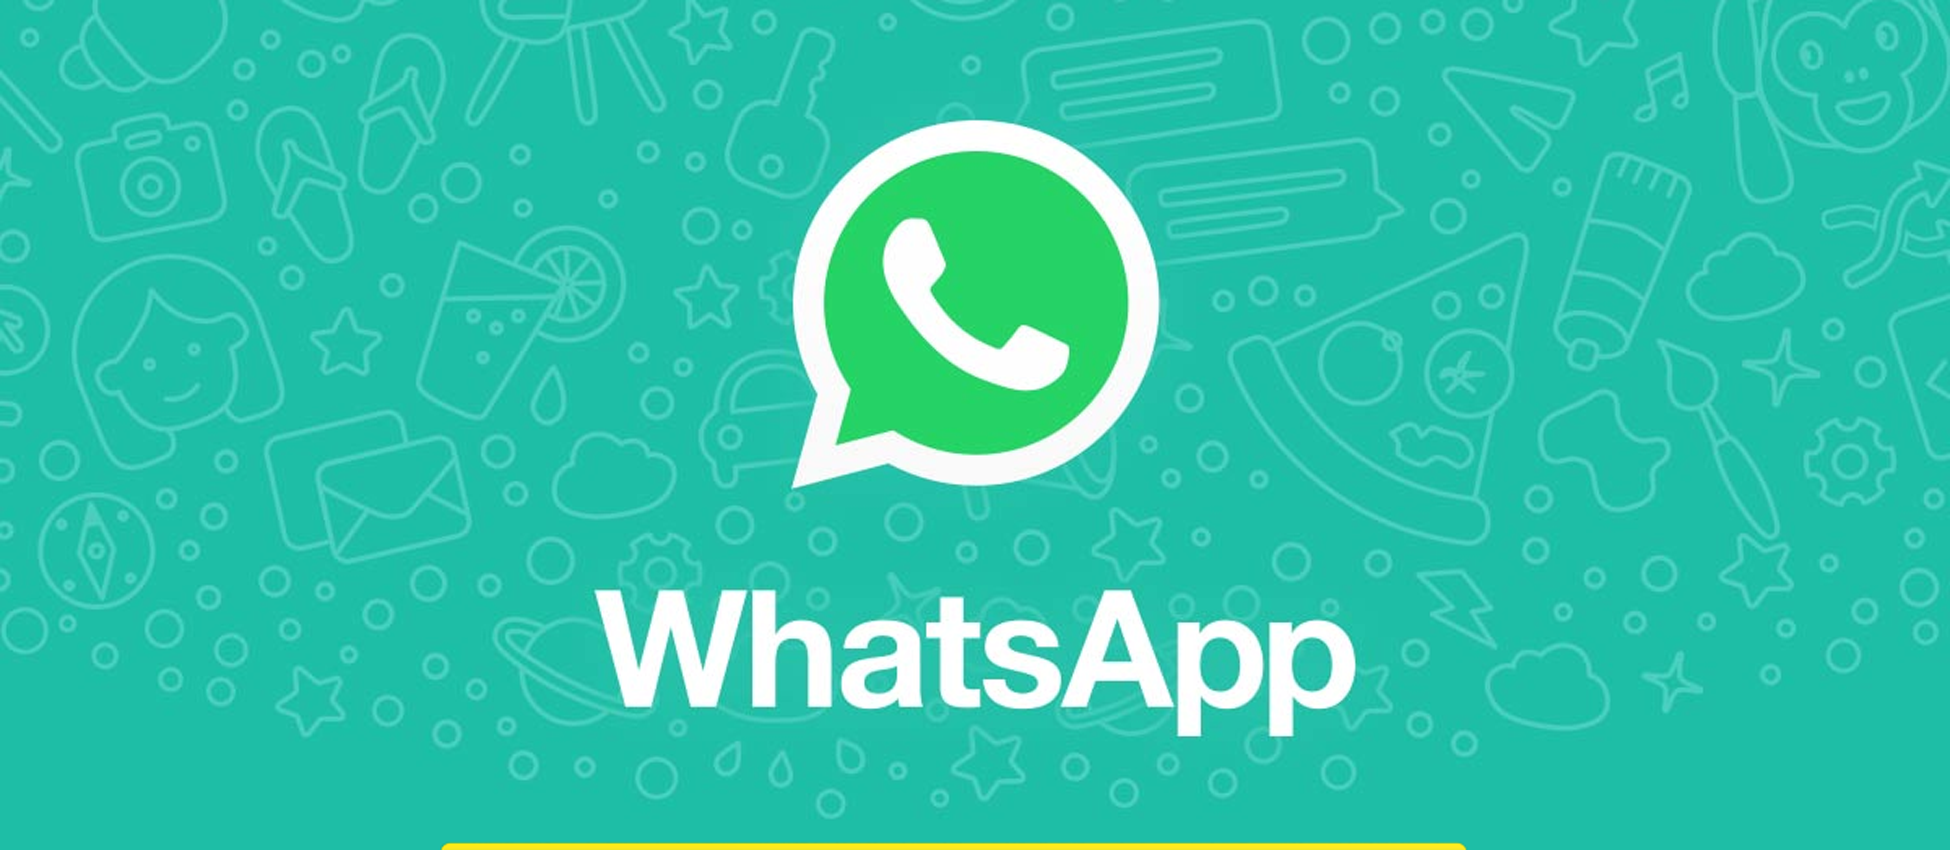 WhatsApp Web começa a testar chamadas voz e vídeo no PC